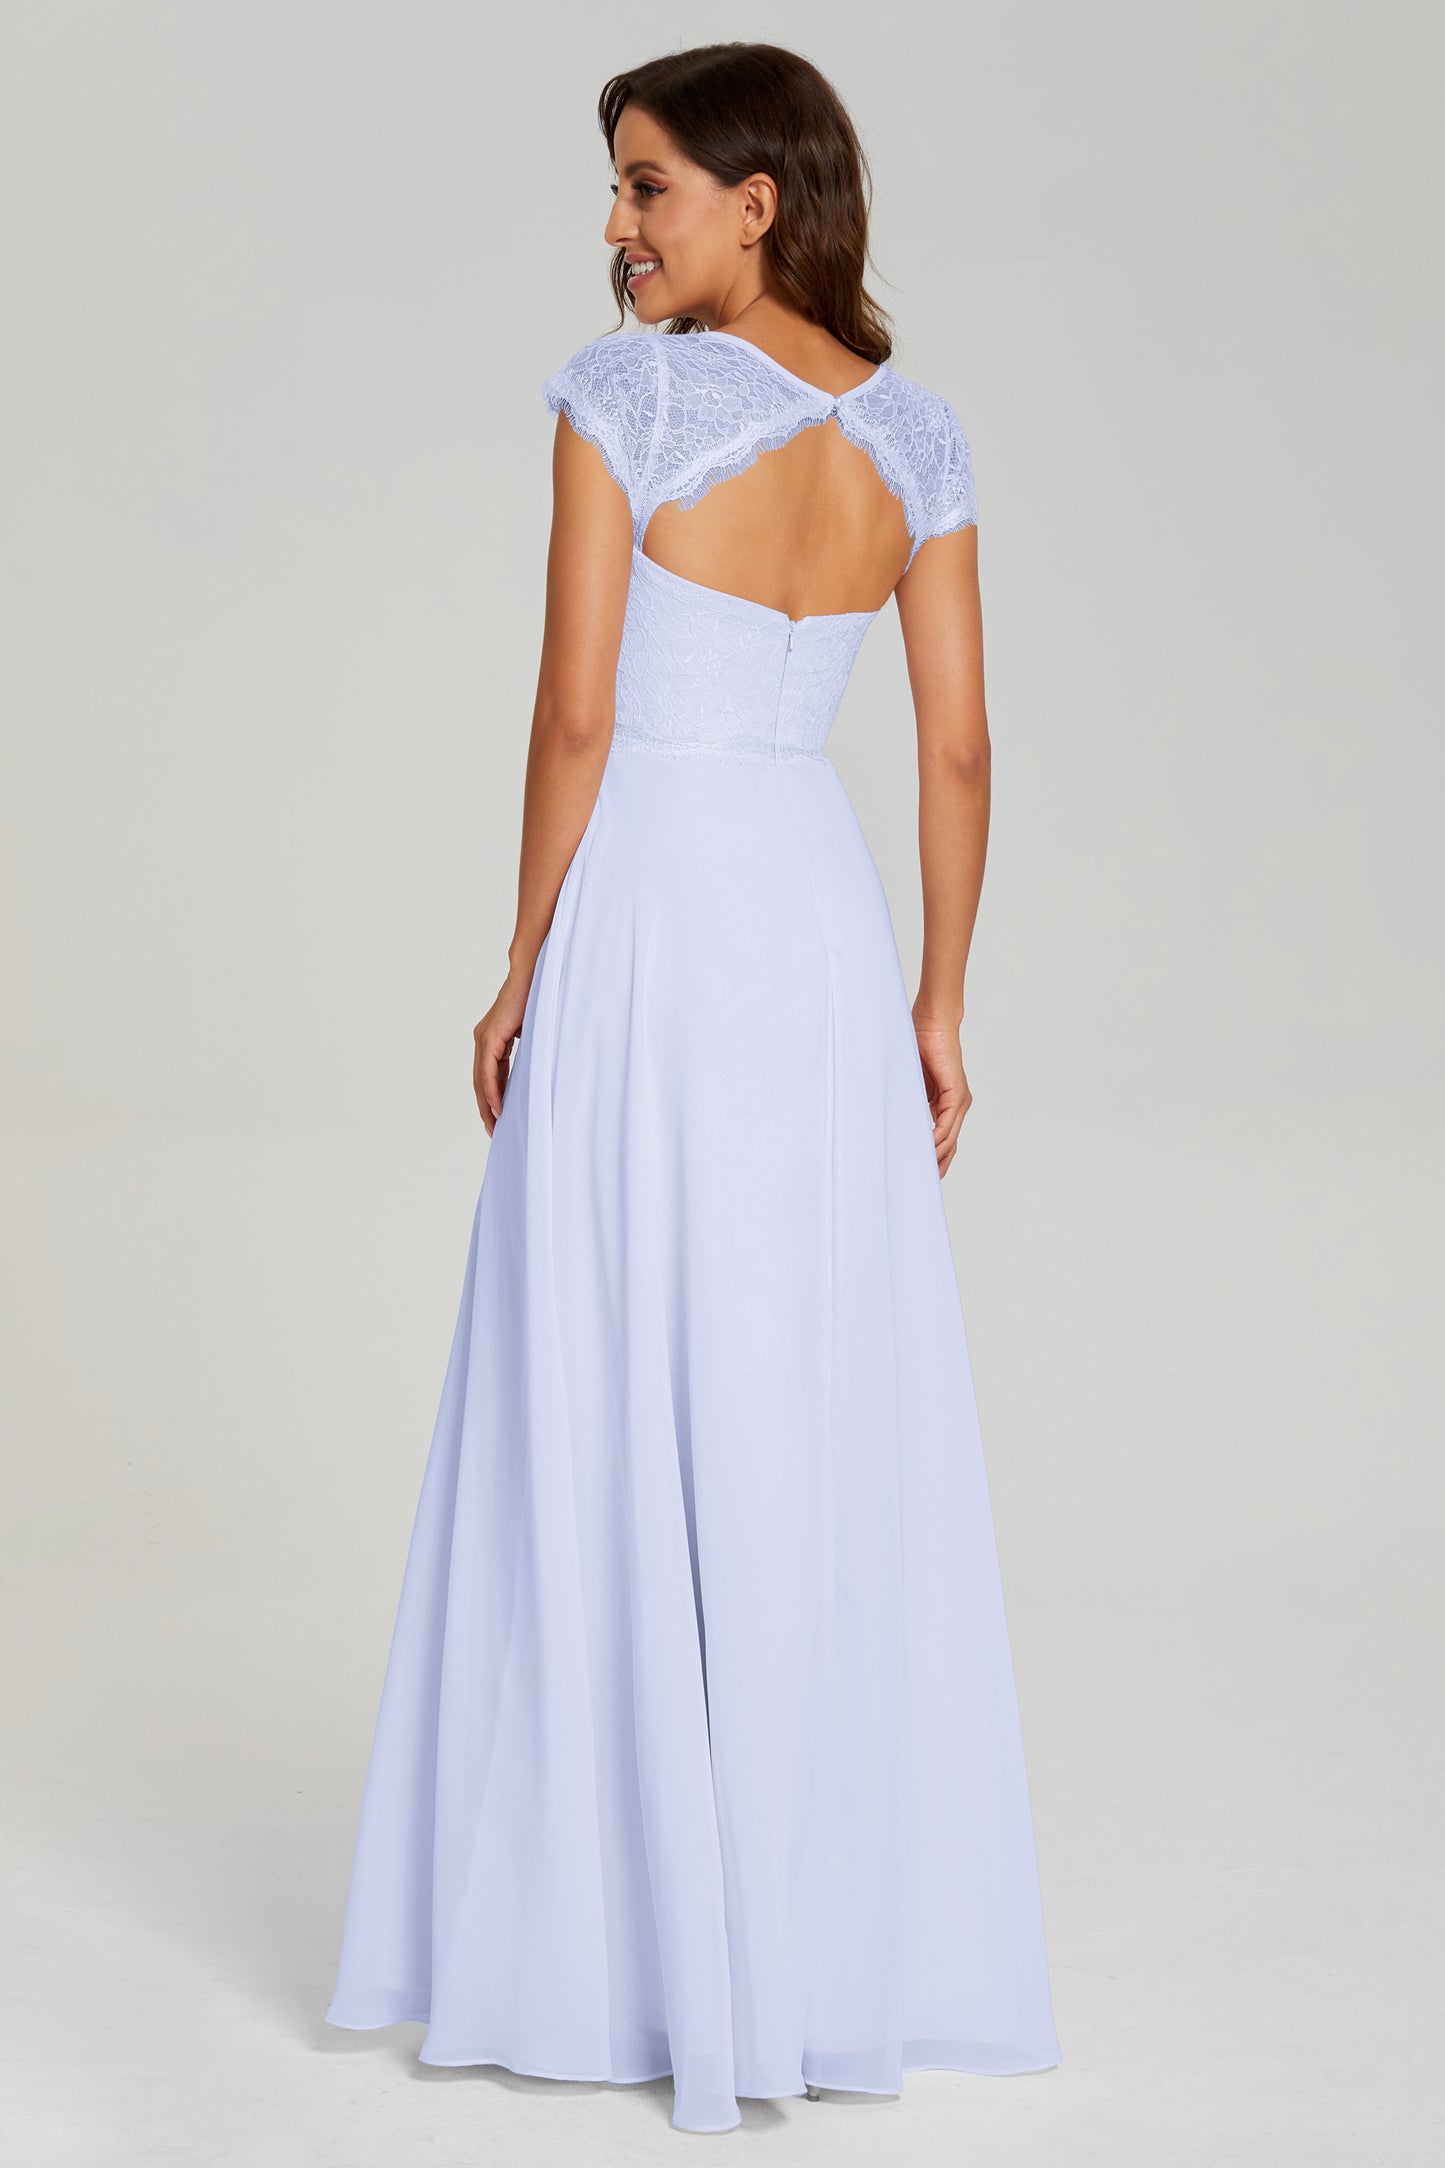 Cap Sleeve Illusion Chiffon Prom Dresses